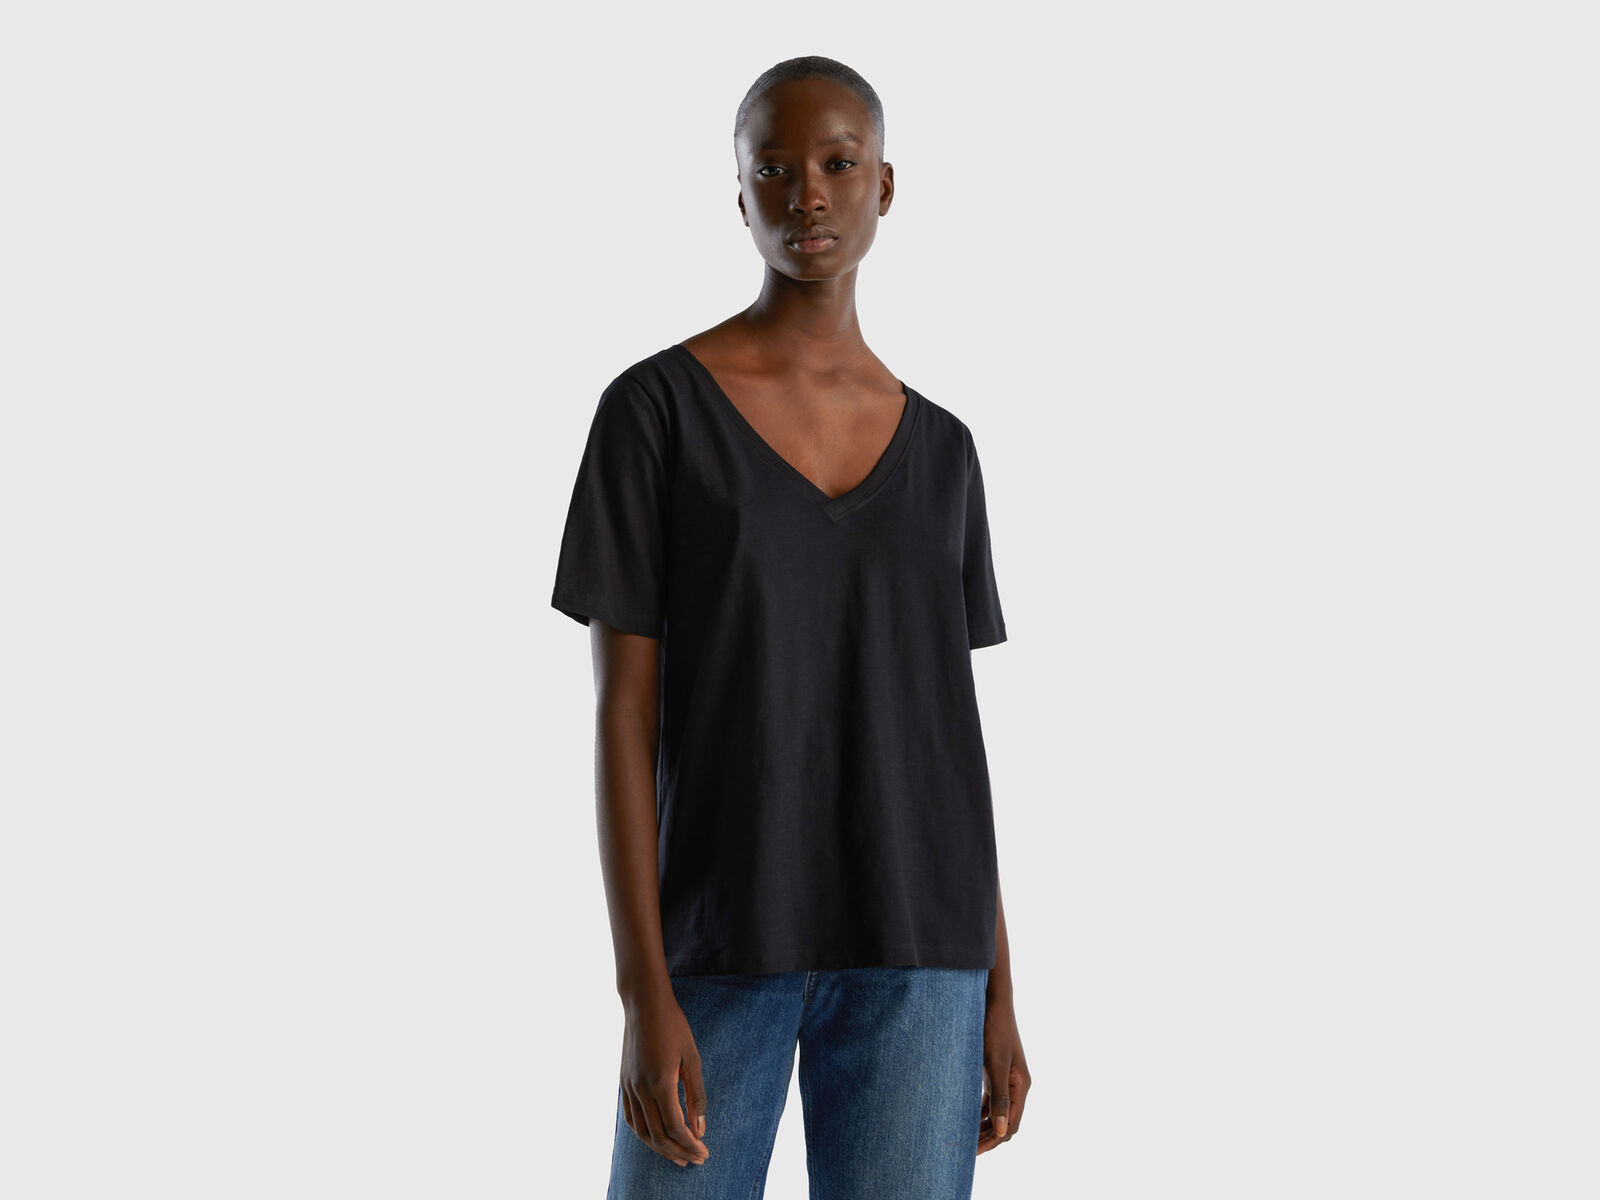 V-neck t-shirt in | Black cotton Benetton slub 